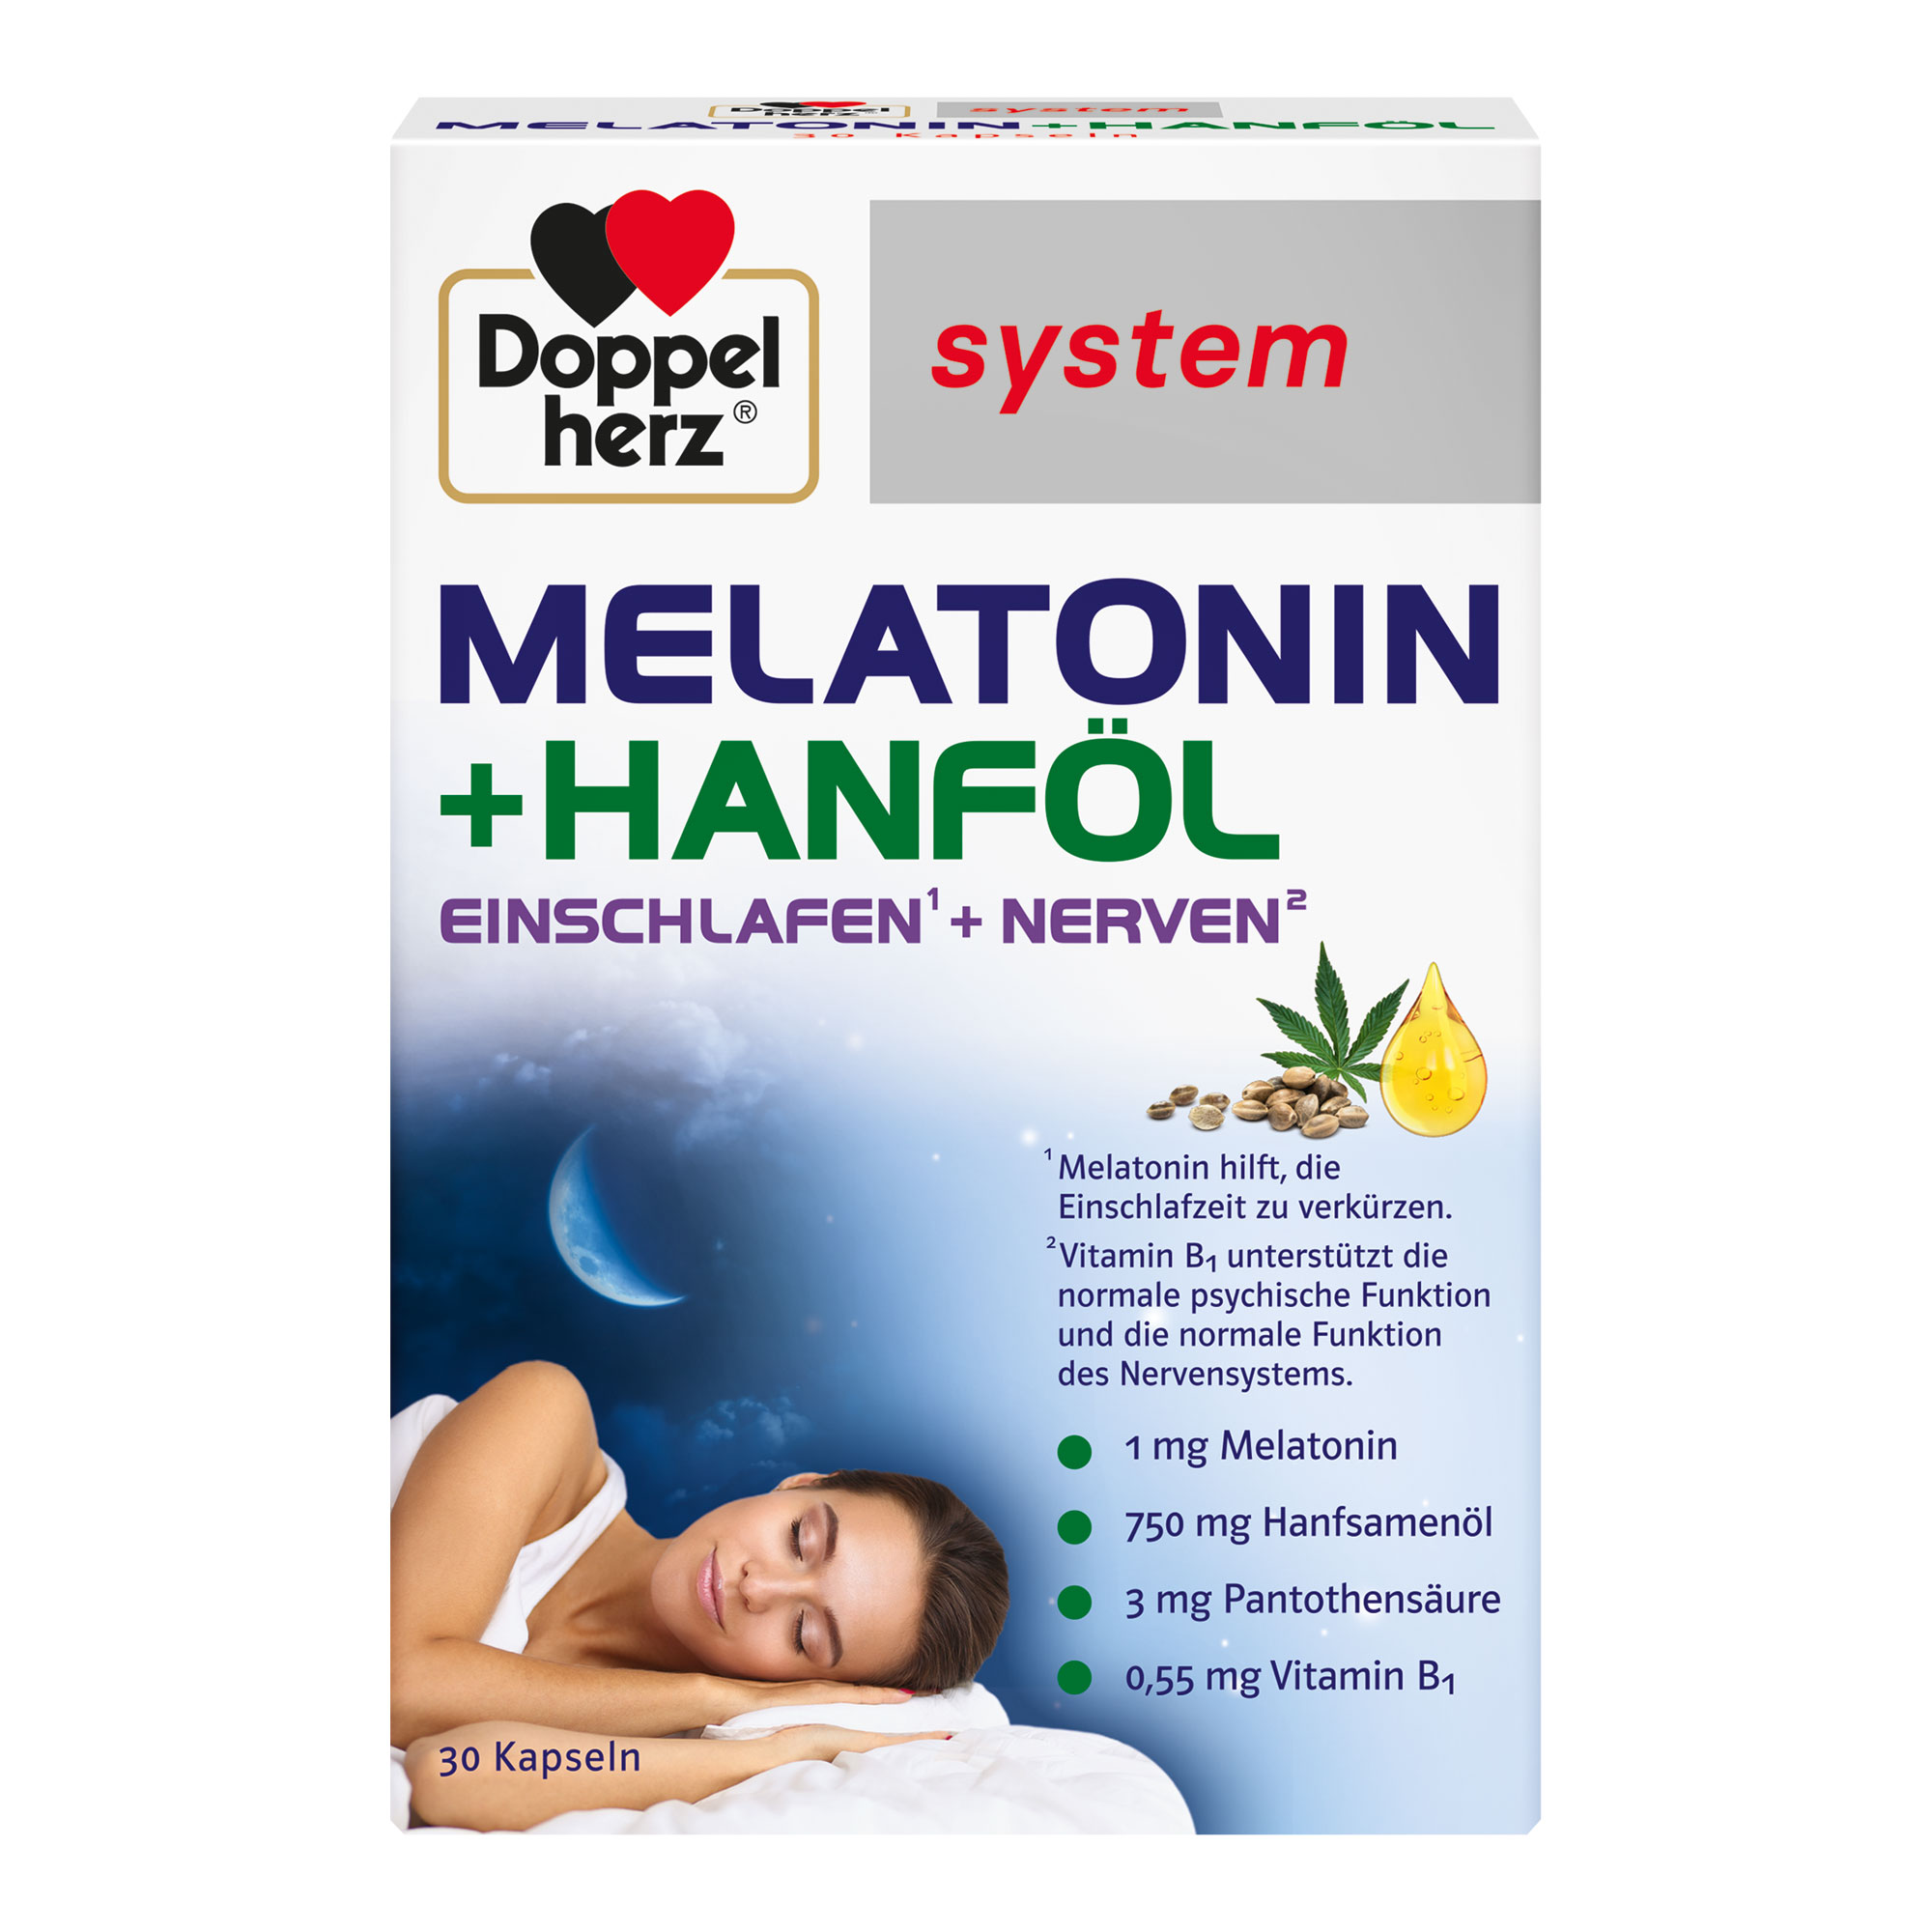 Nahrungsergänzungsmittel mit Melatonin, Hanfsamenöl, Vitamin B1 und B5 (Pantothensäure).